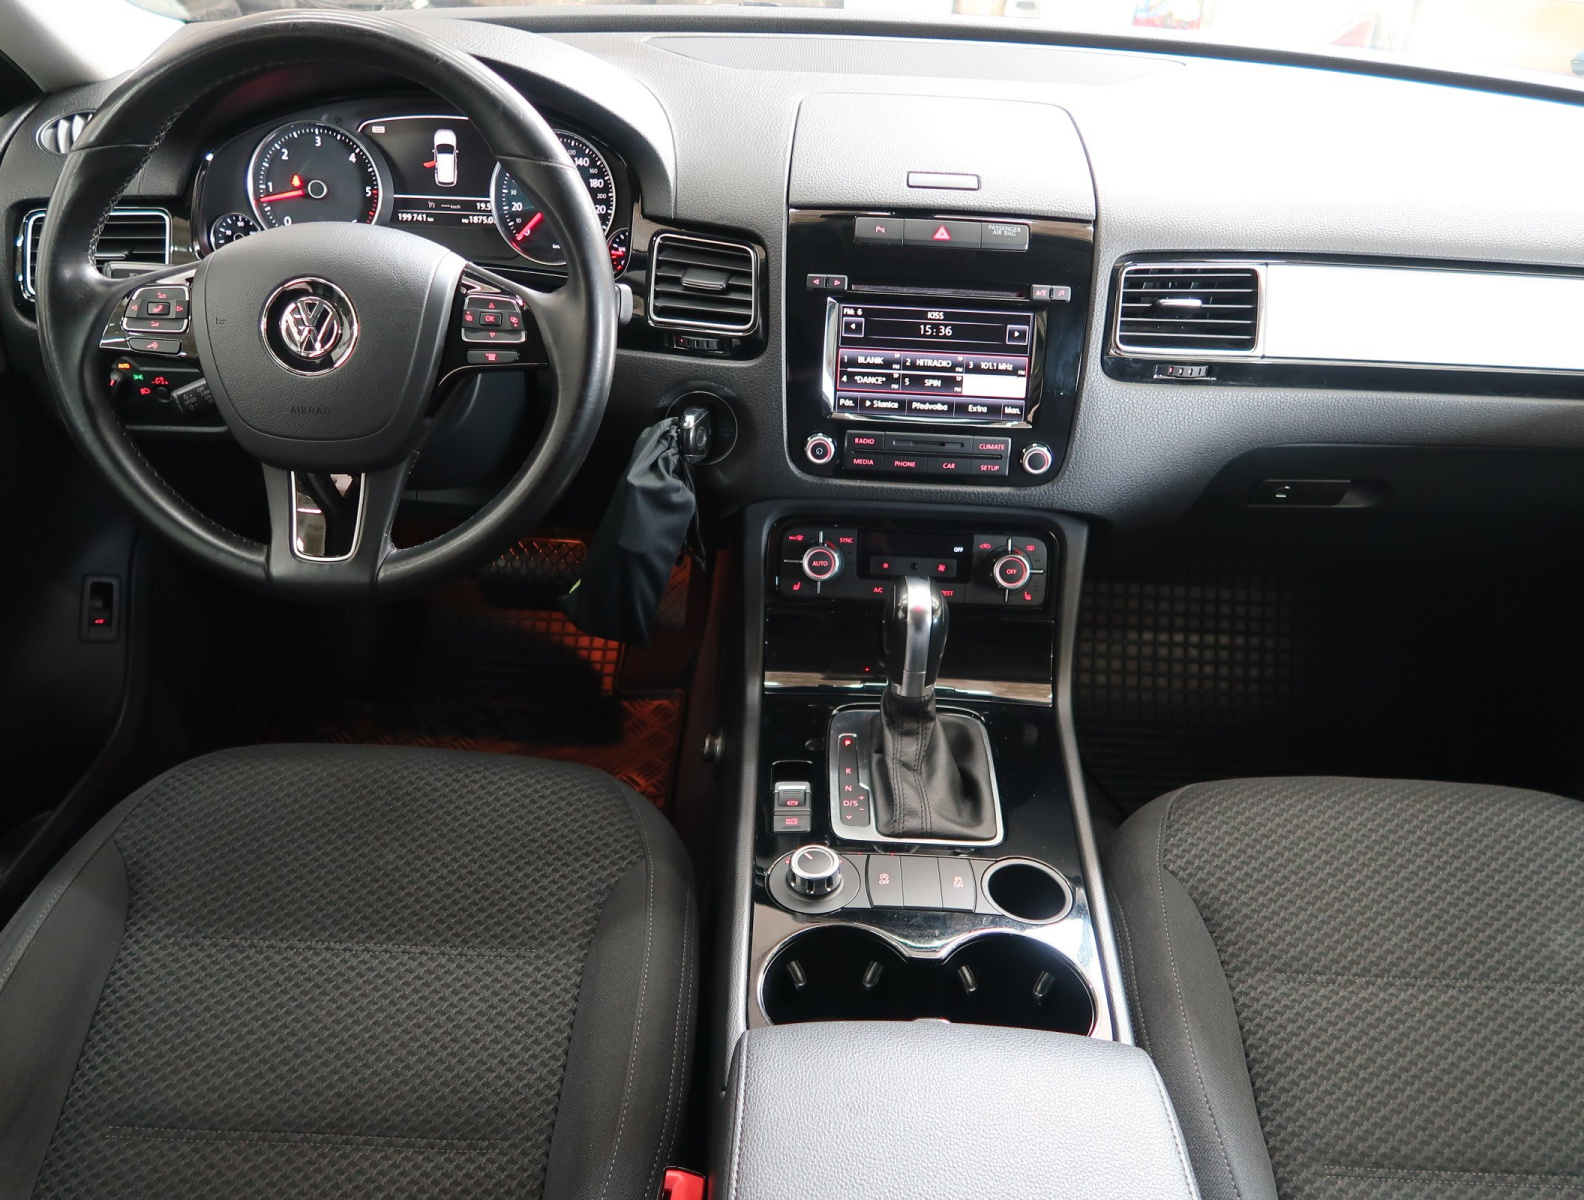 Volkswagen Touareg, 2014, 3.0 TDI, 150kW, 4x4